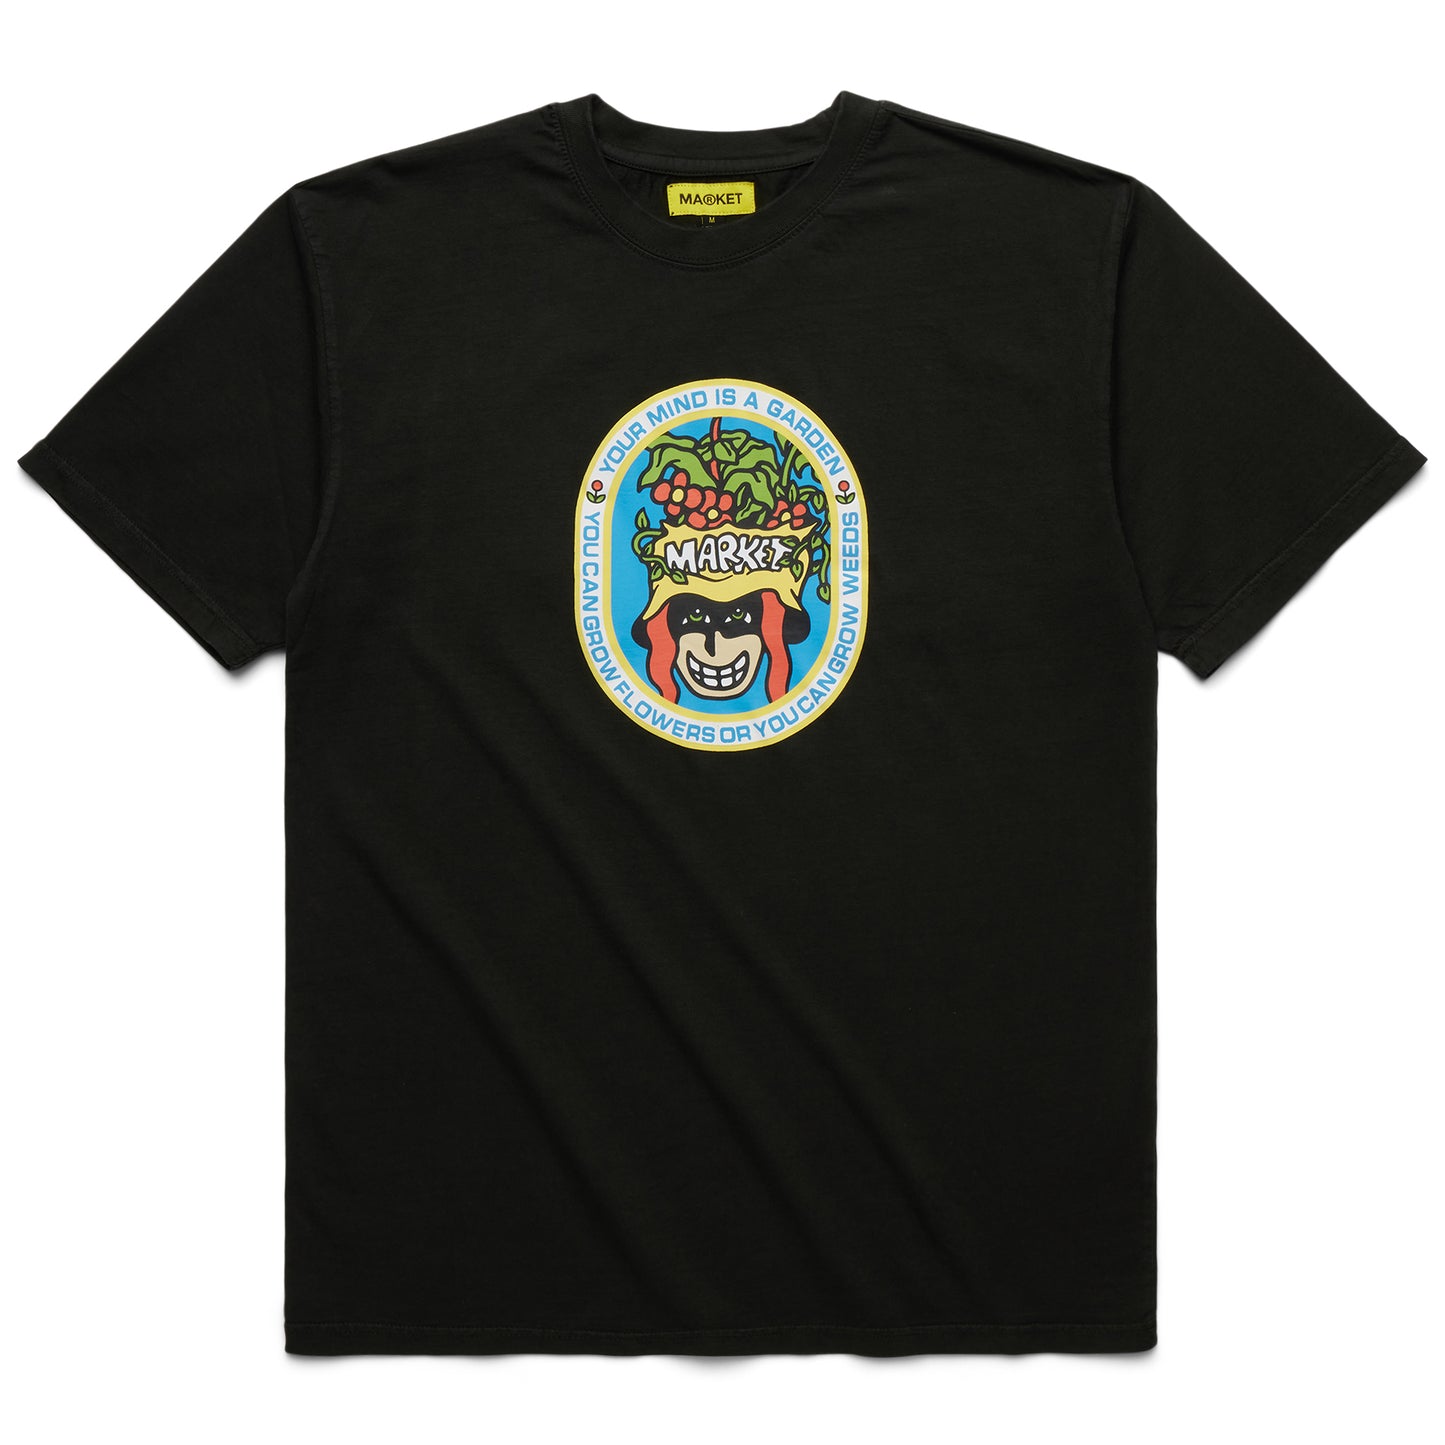 MARKET Land Escape Garden T-Shirt